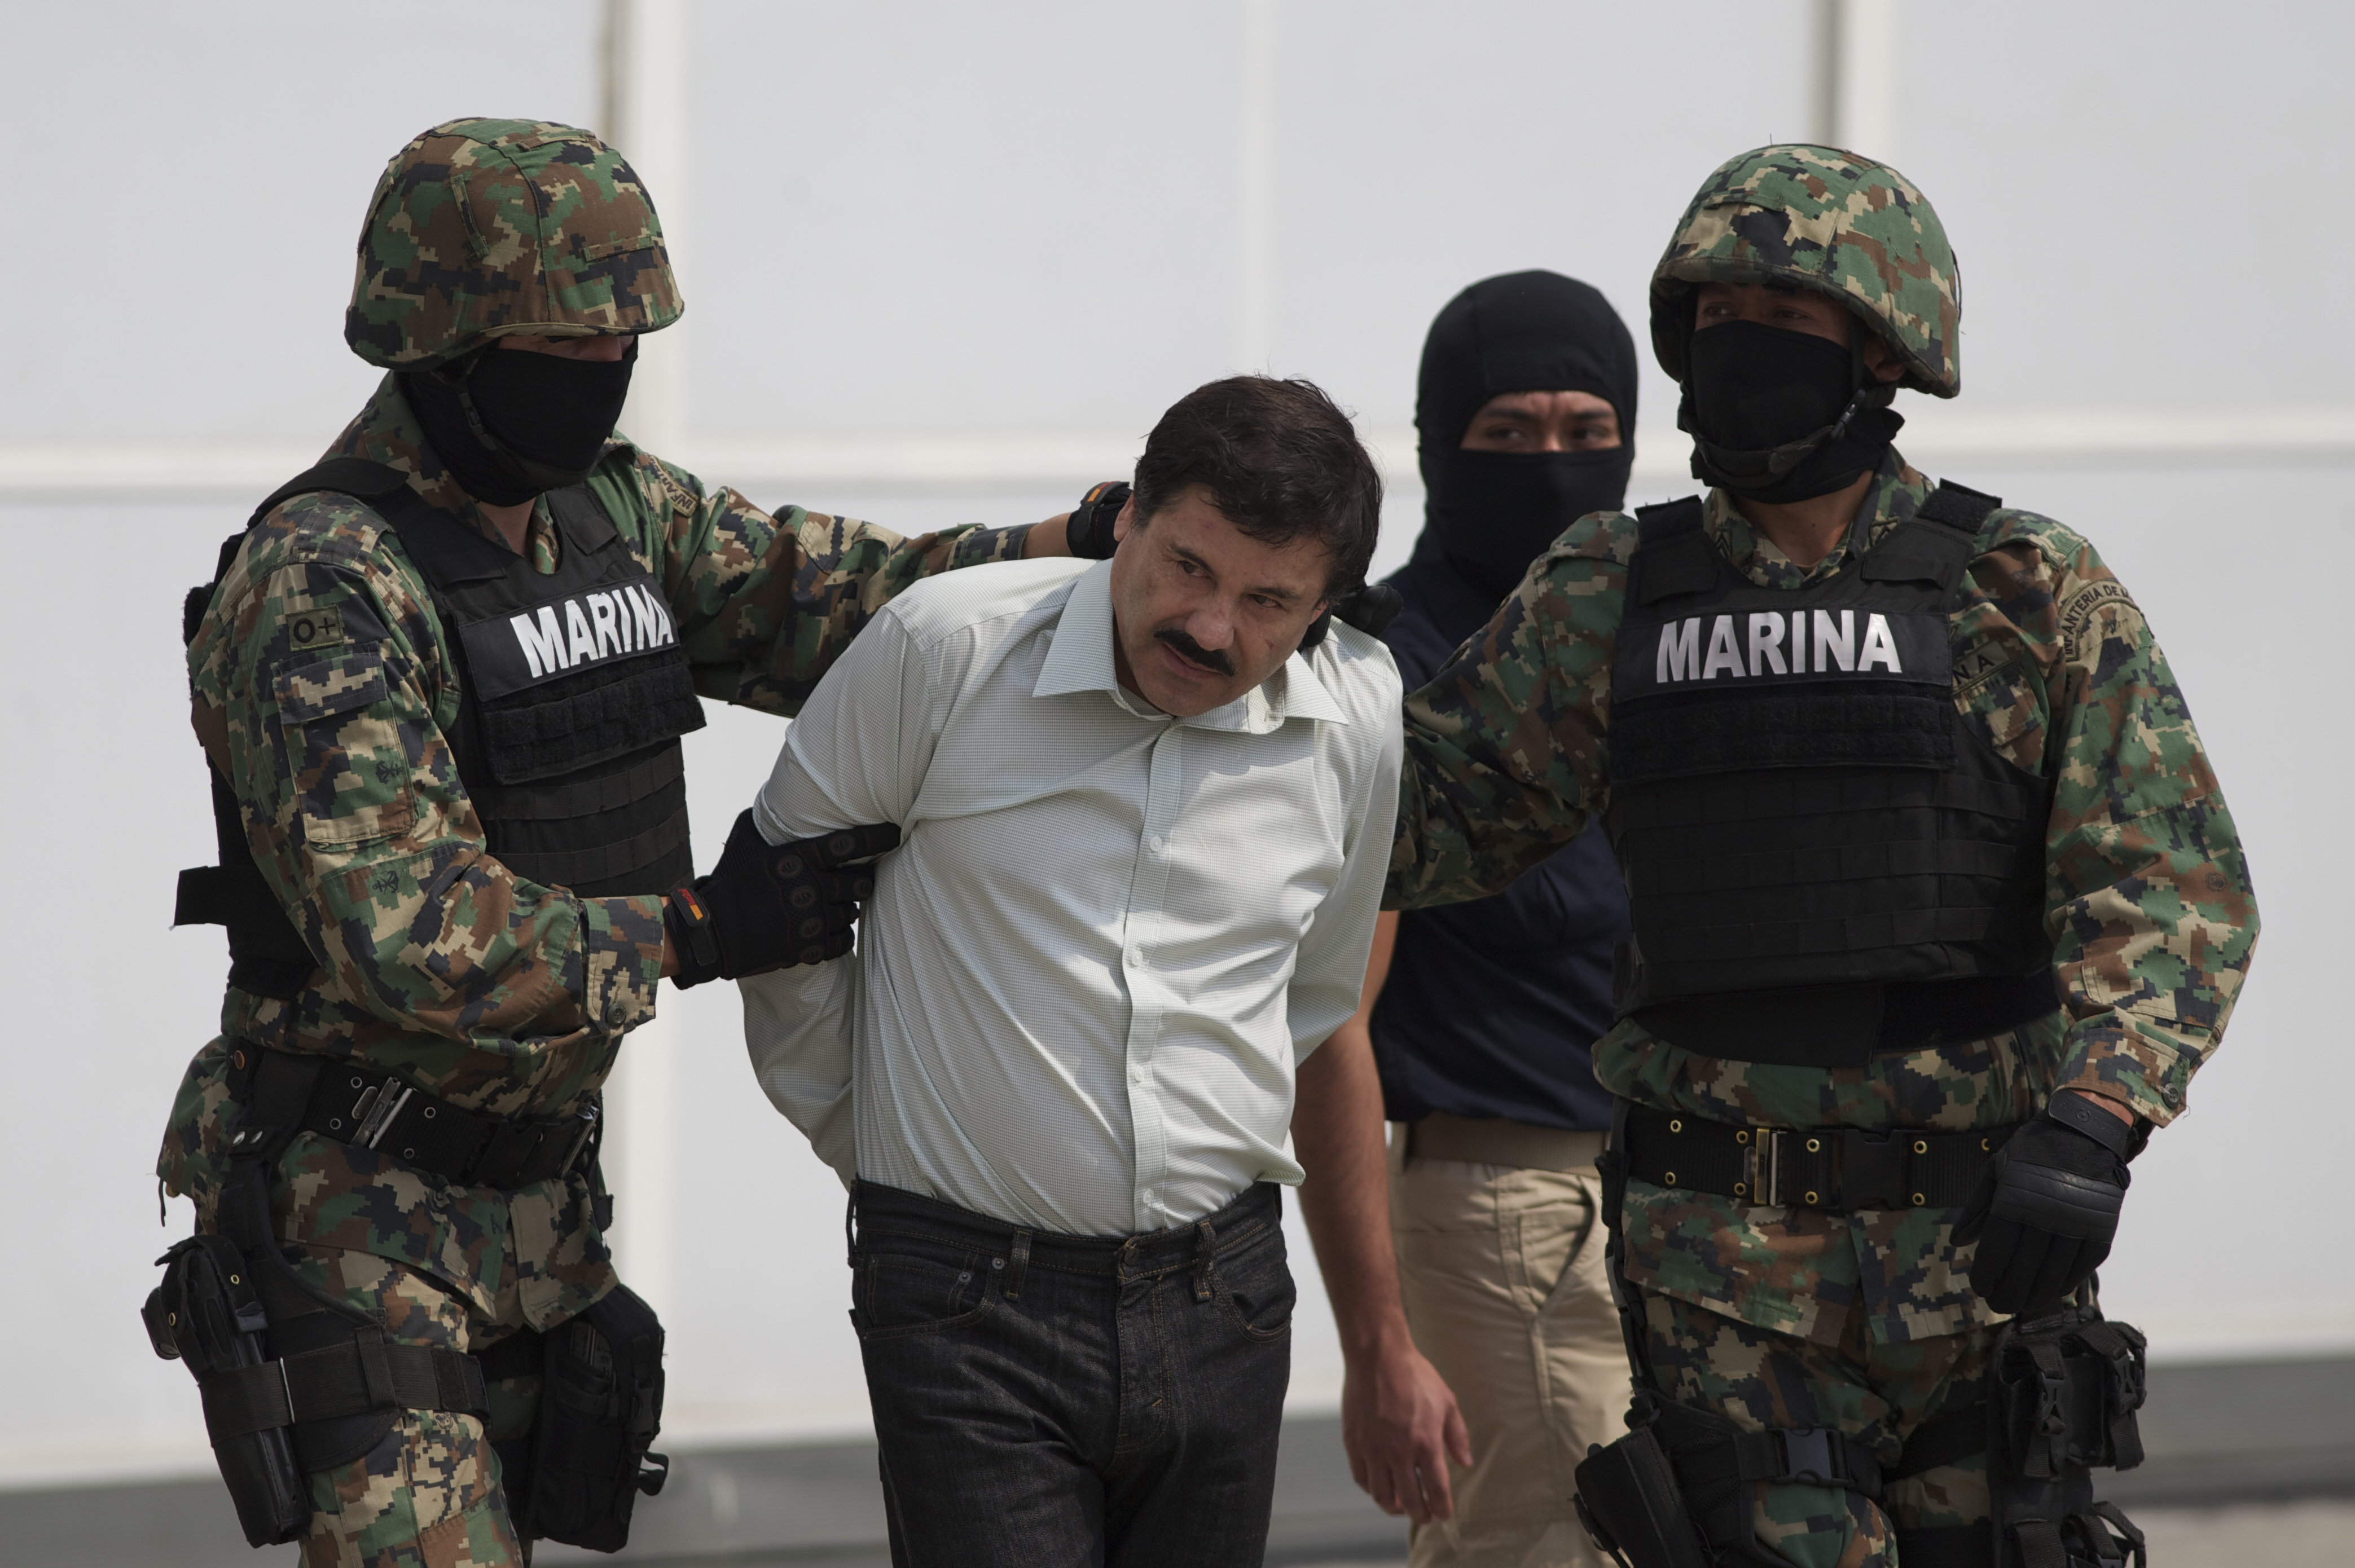 El Chapo trial highlights how Mexico graft impedes drug war